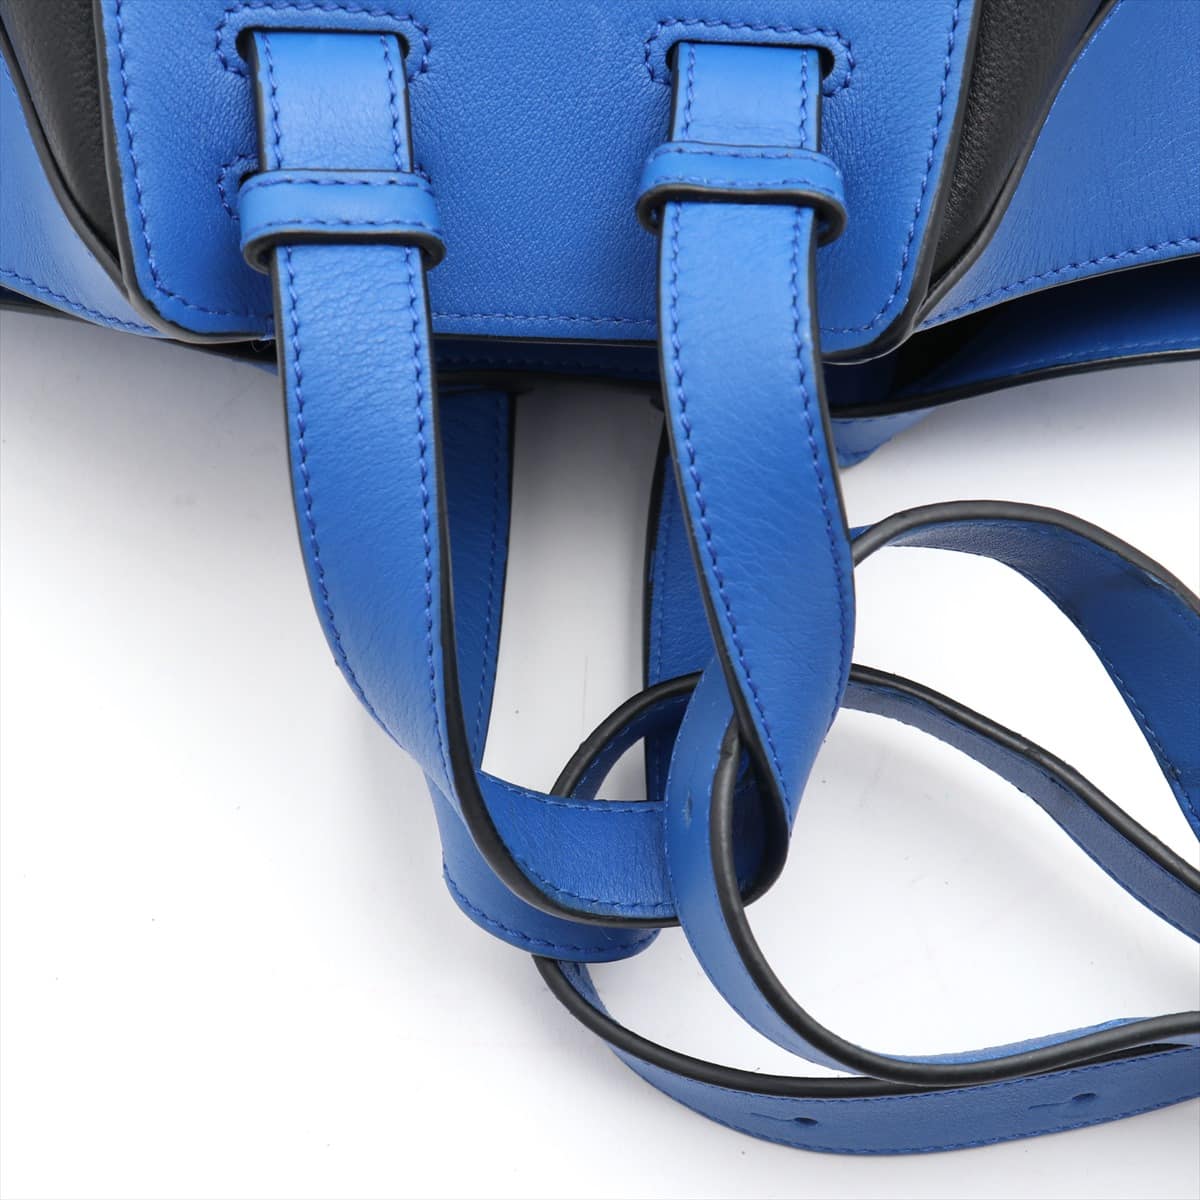 Loewe Hammock small Leather Shoulder bag Blue x black